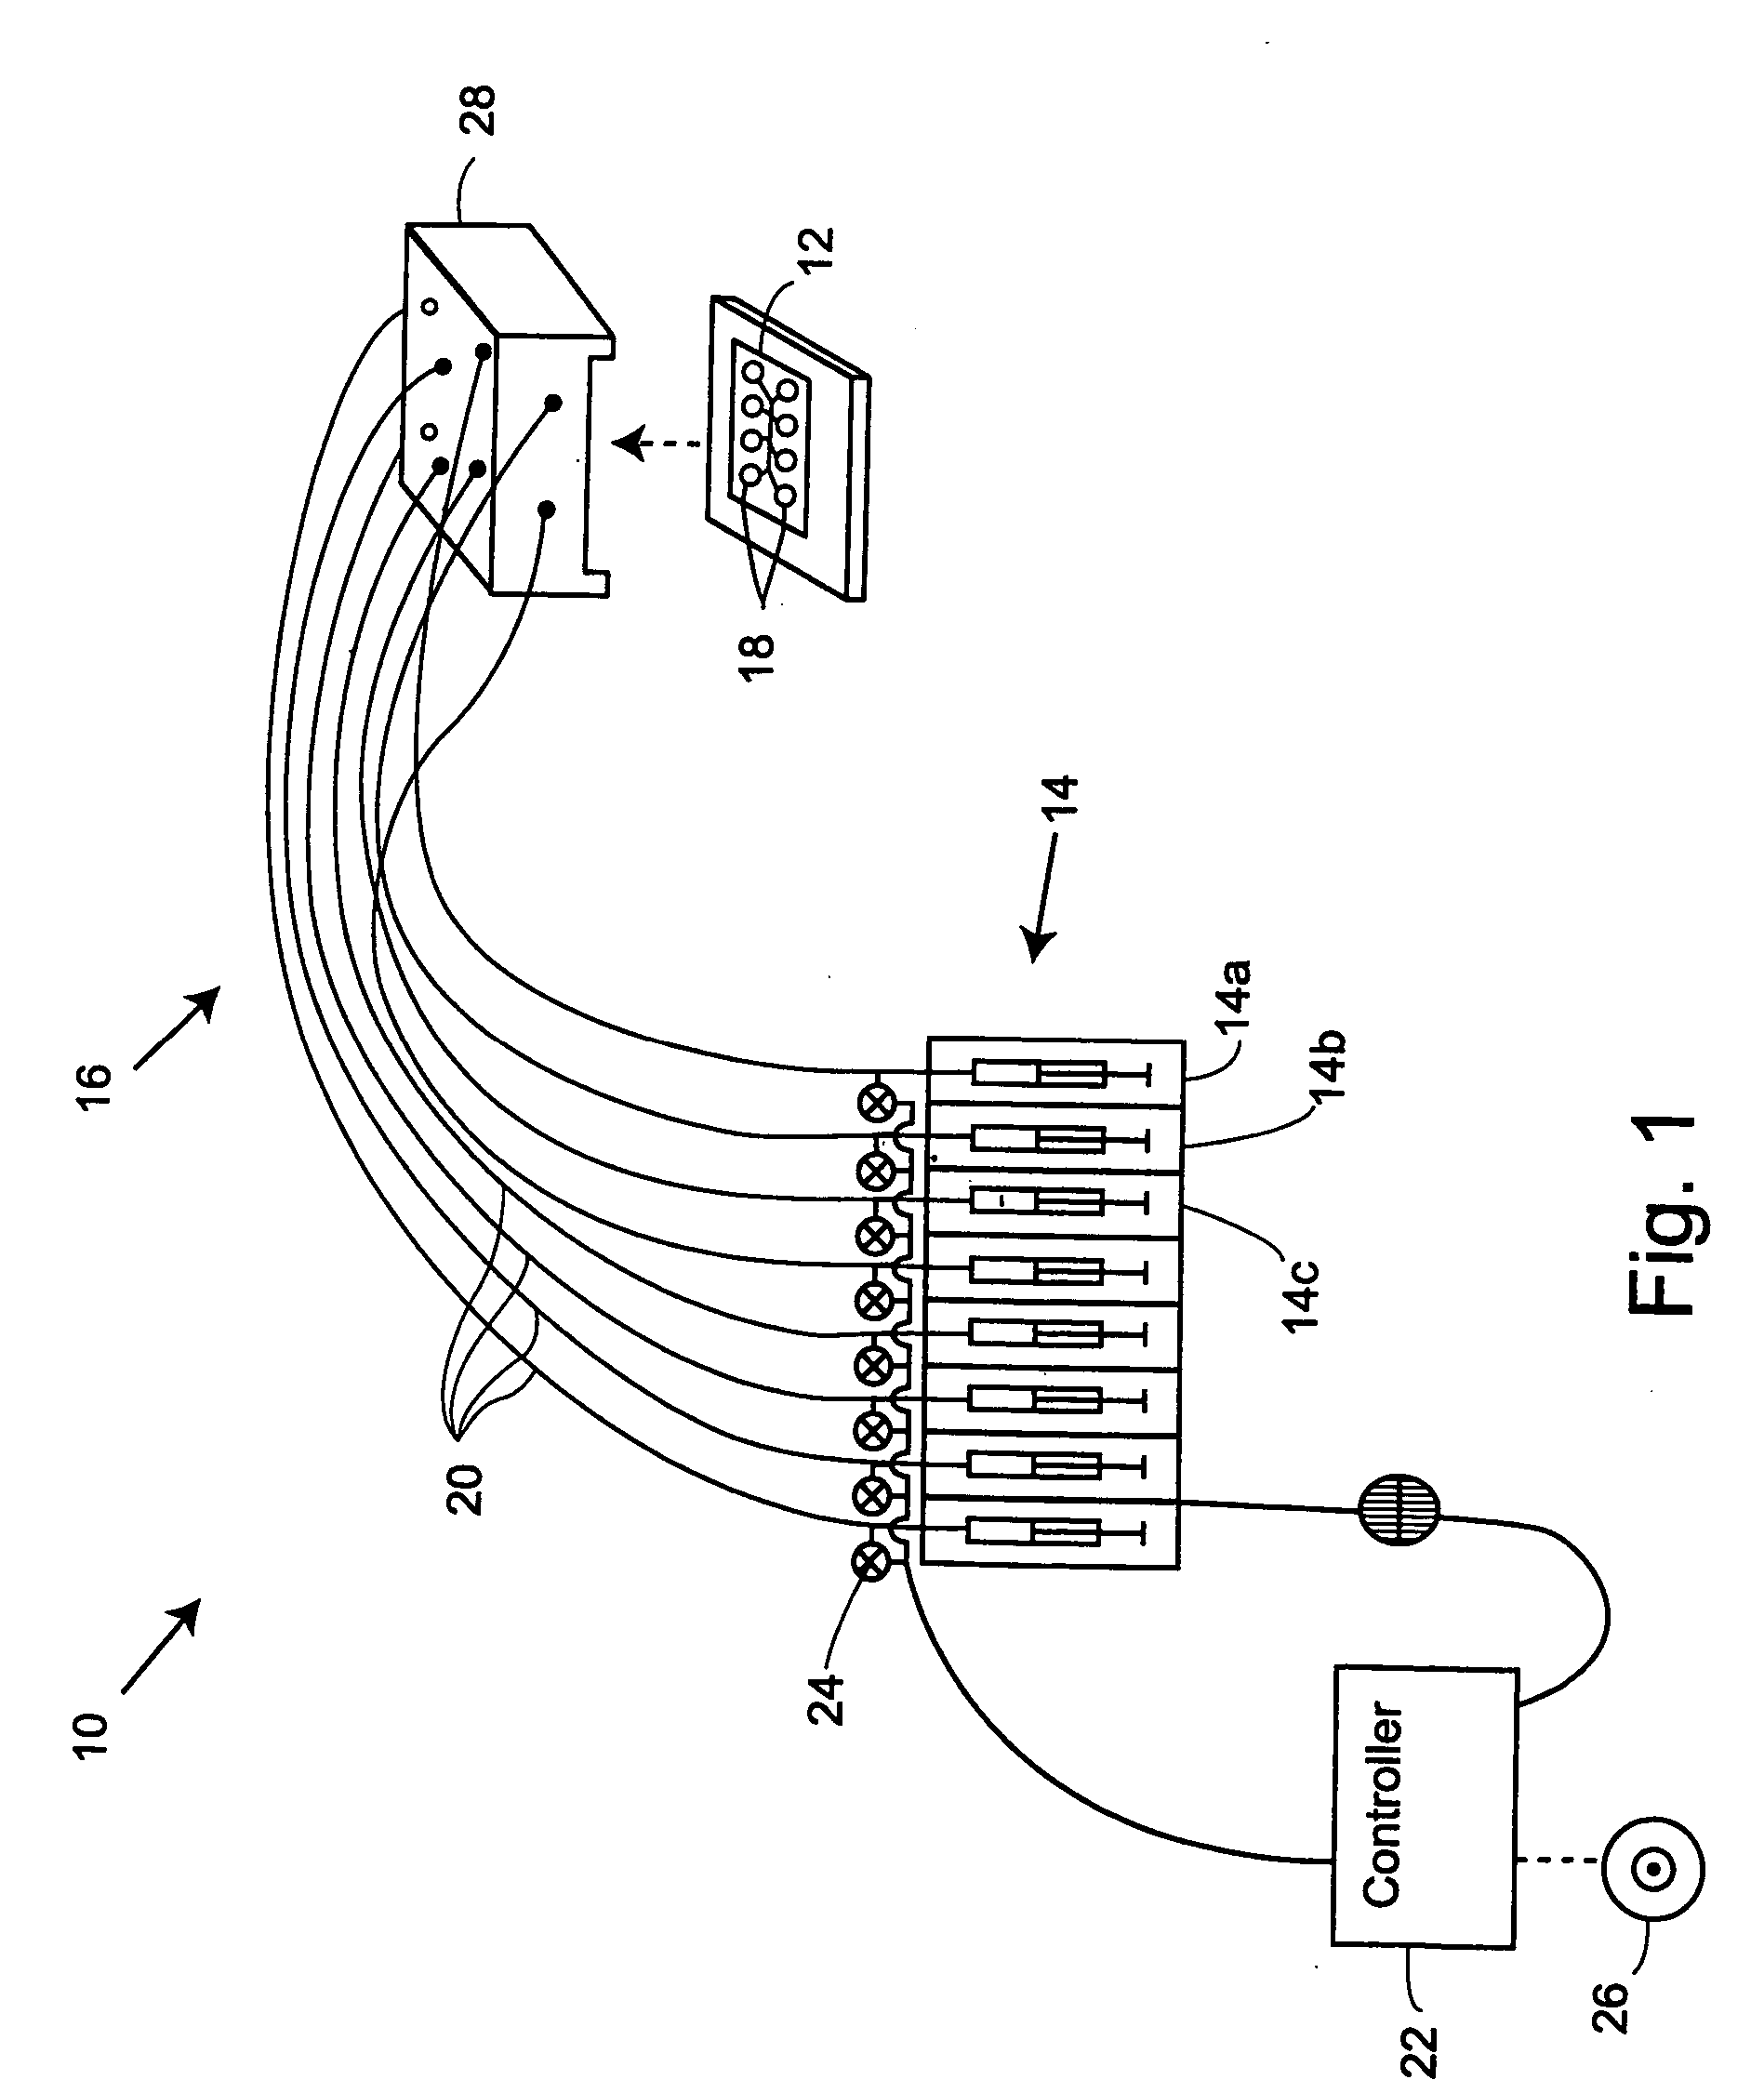 Multi-reservoir pressure control system